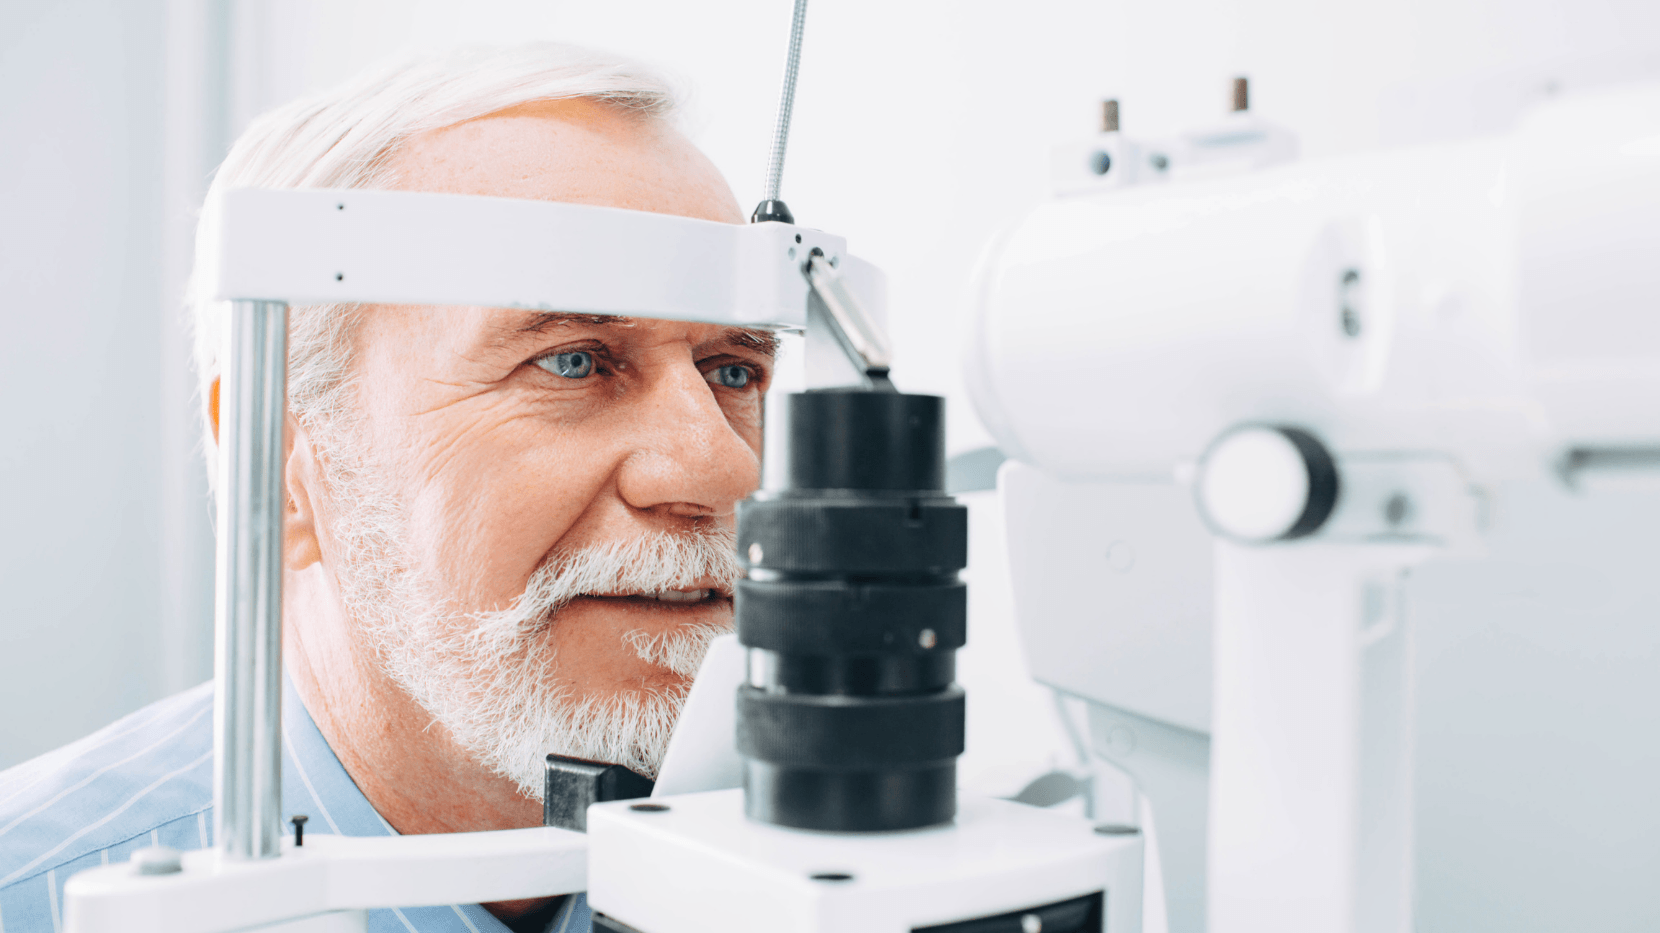 Diabetic retinal screening jobs